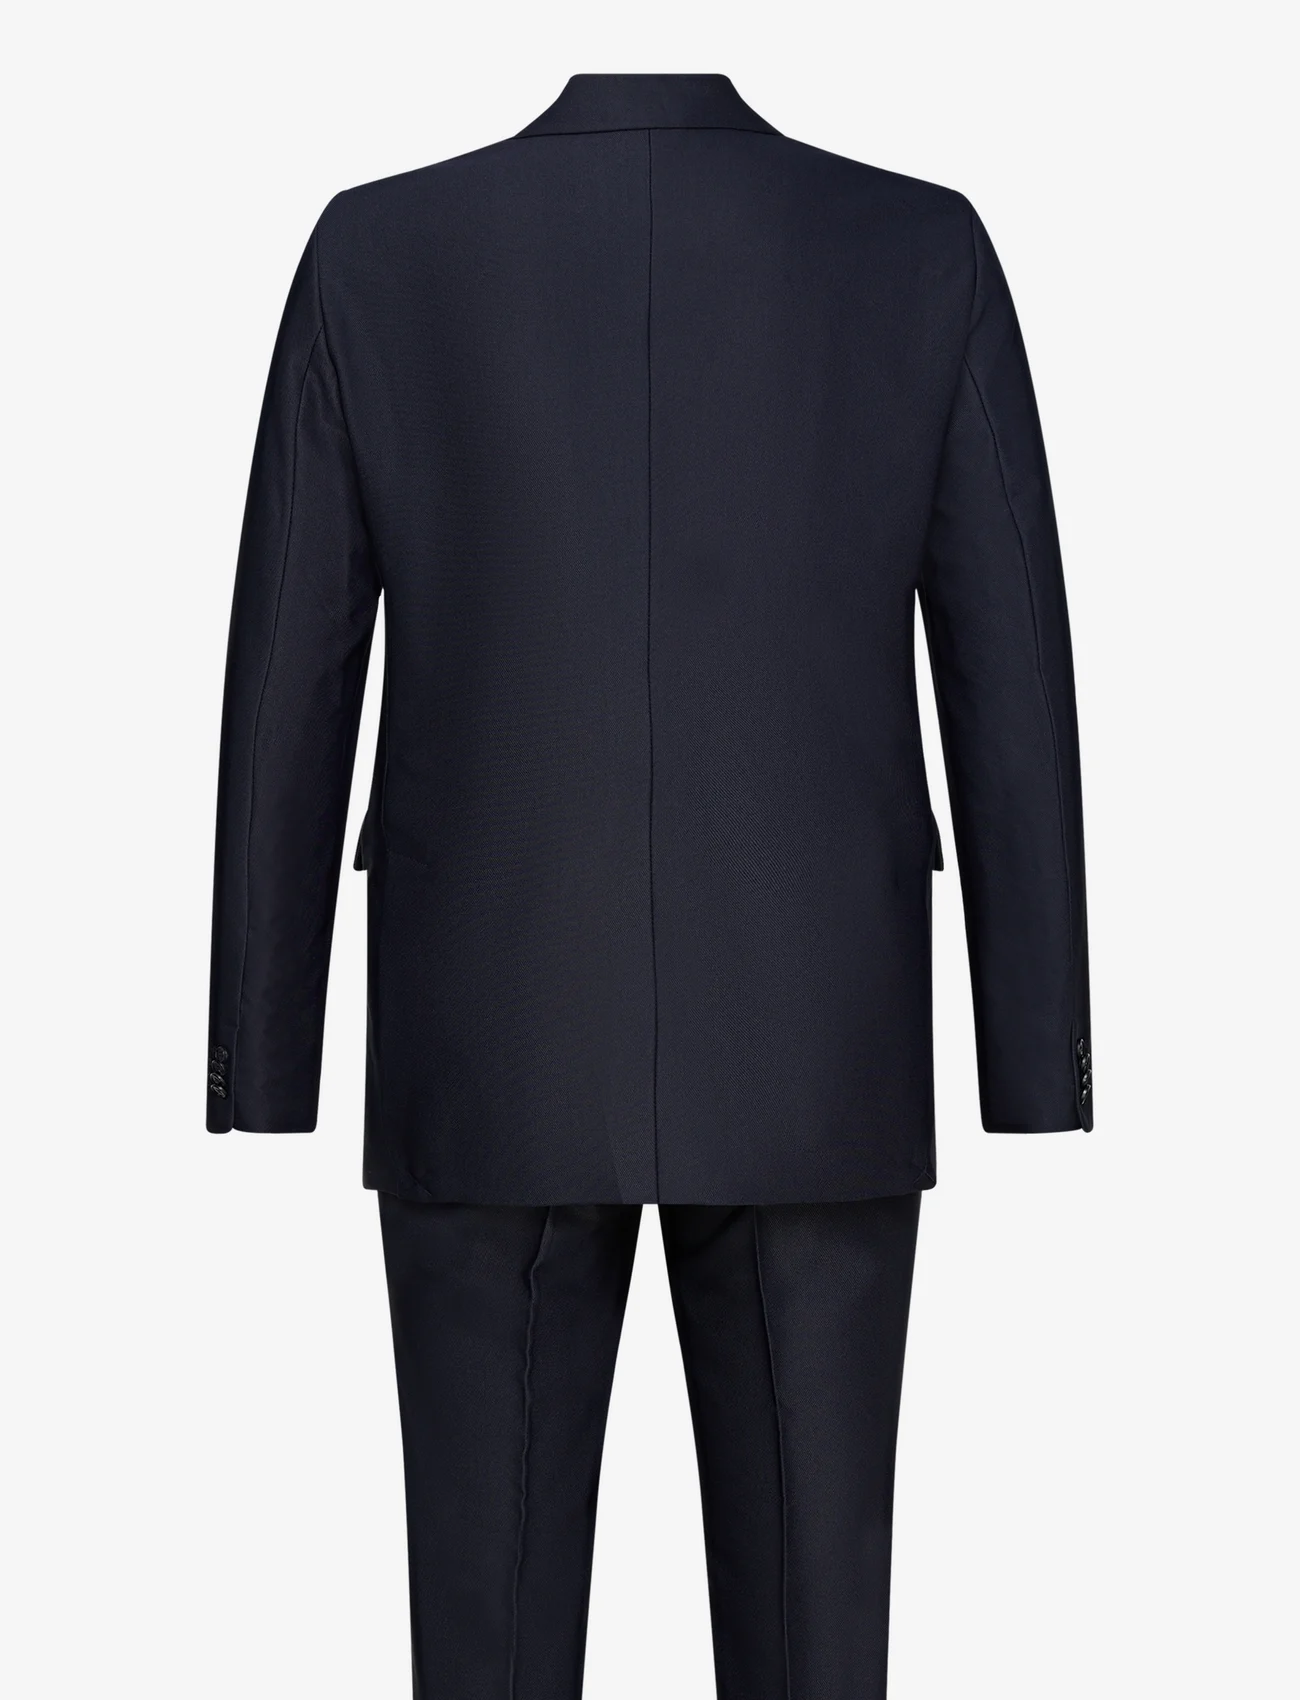 Bruuns Bazaar - WeftBBFrancoAxel suit - kaksiriviset puvut - navy - 1